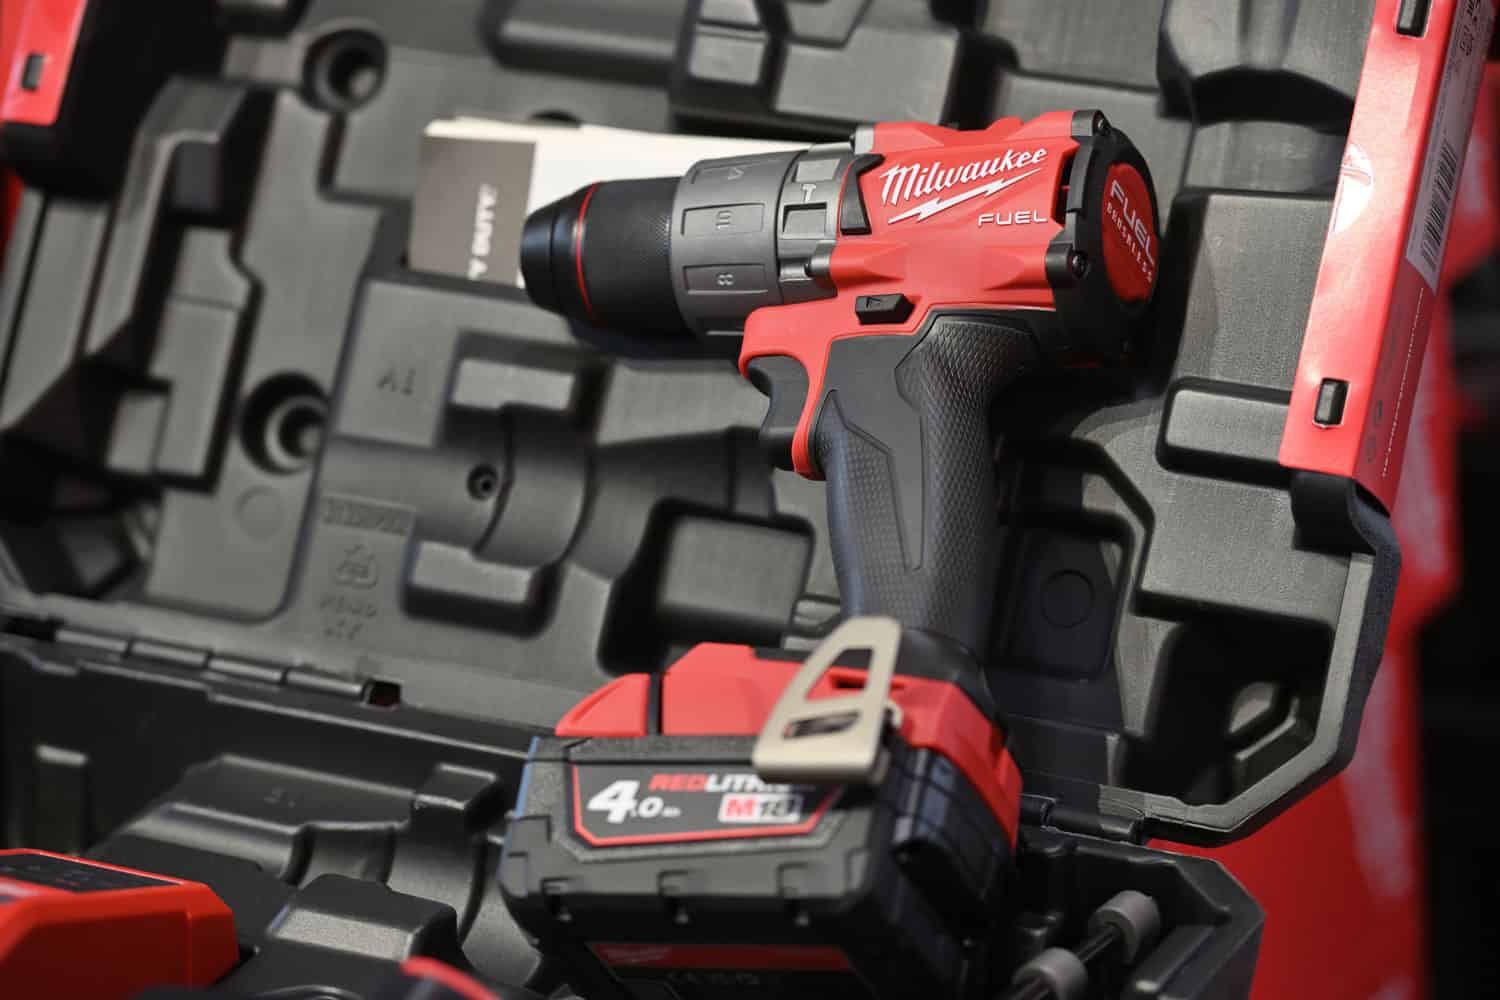 A brand new Milwaukee portable hand drill